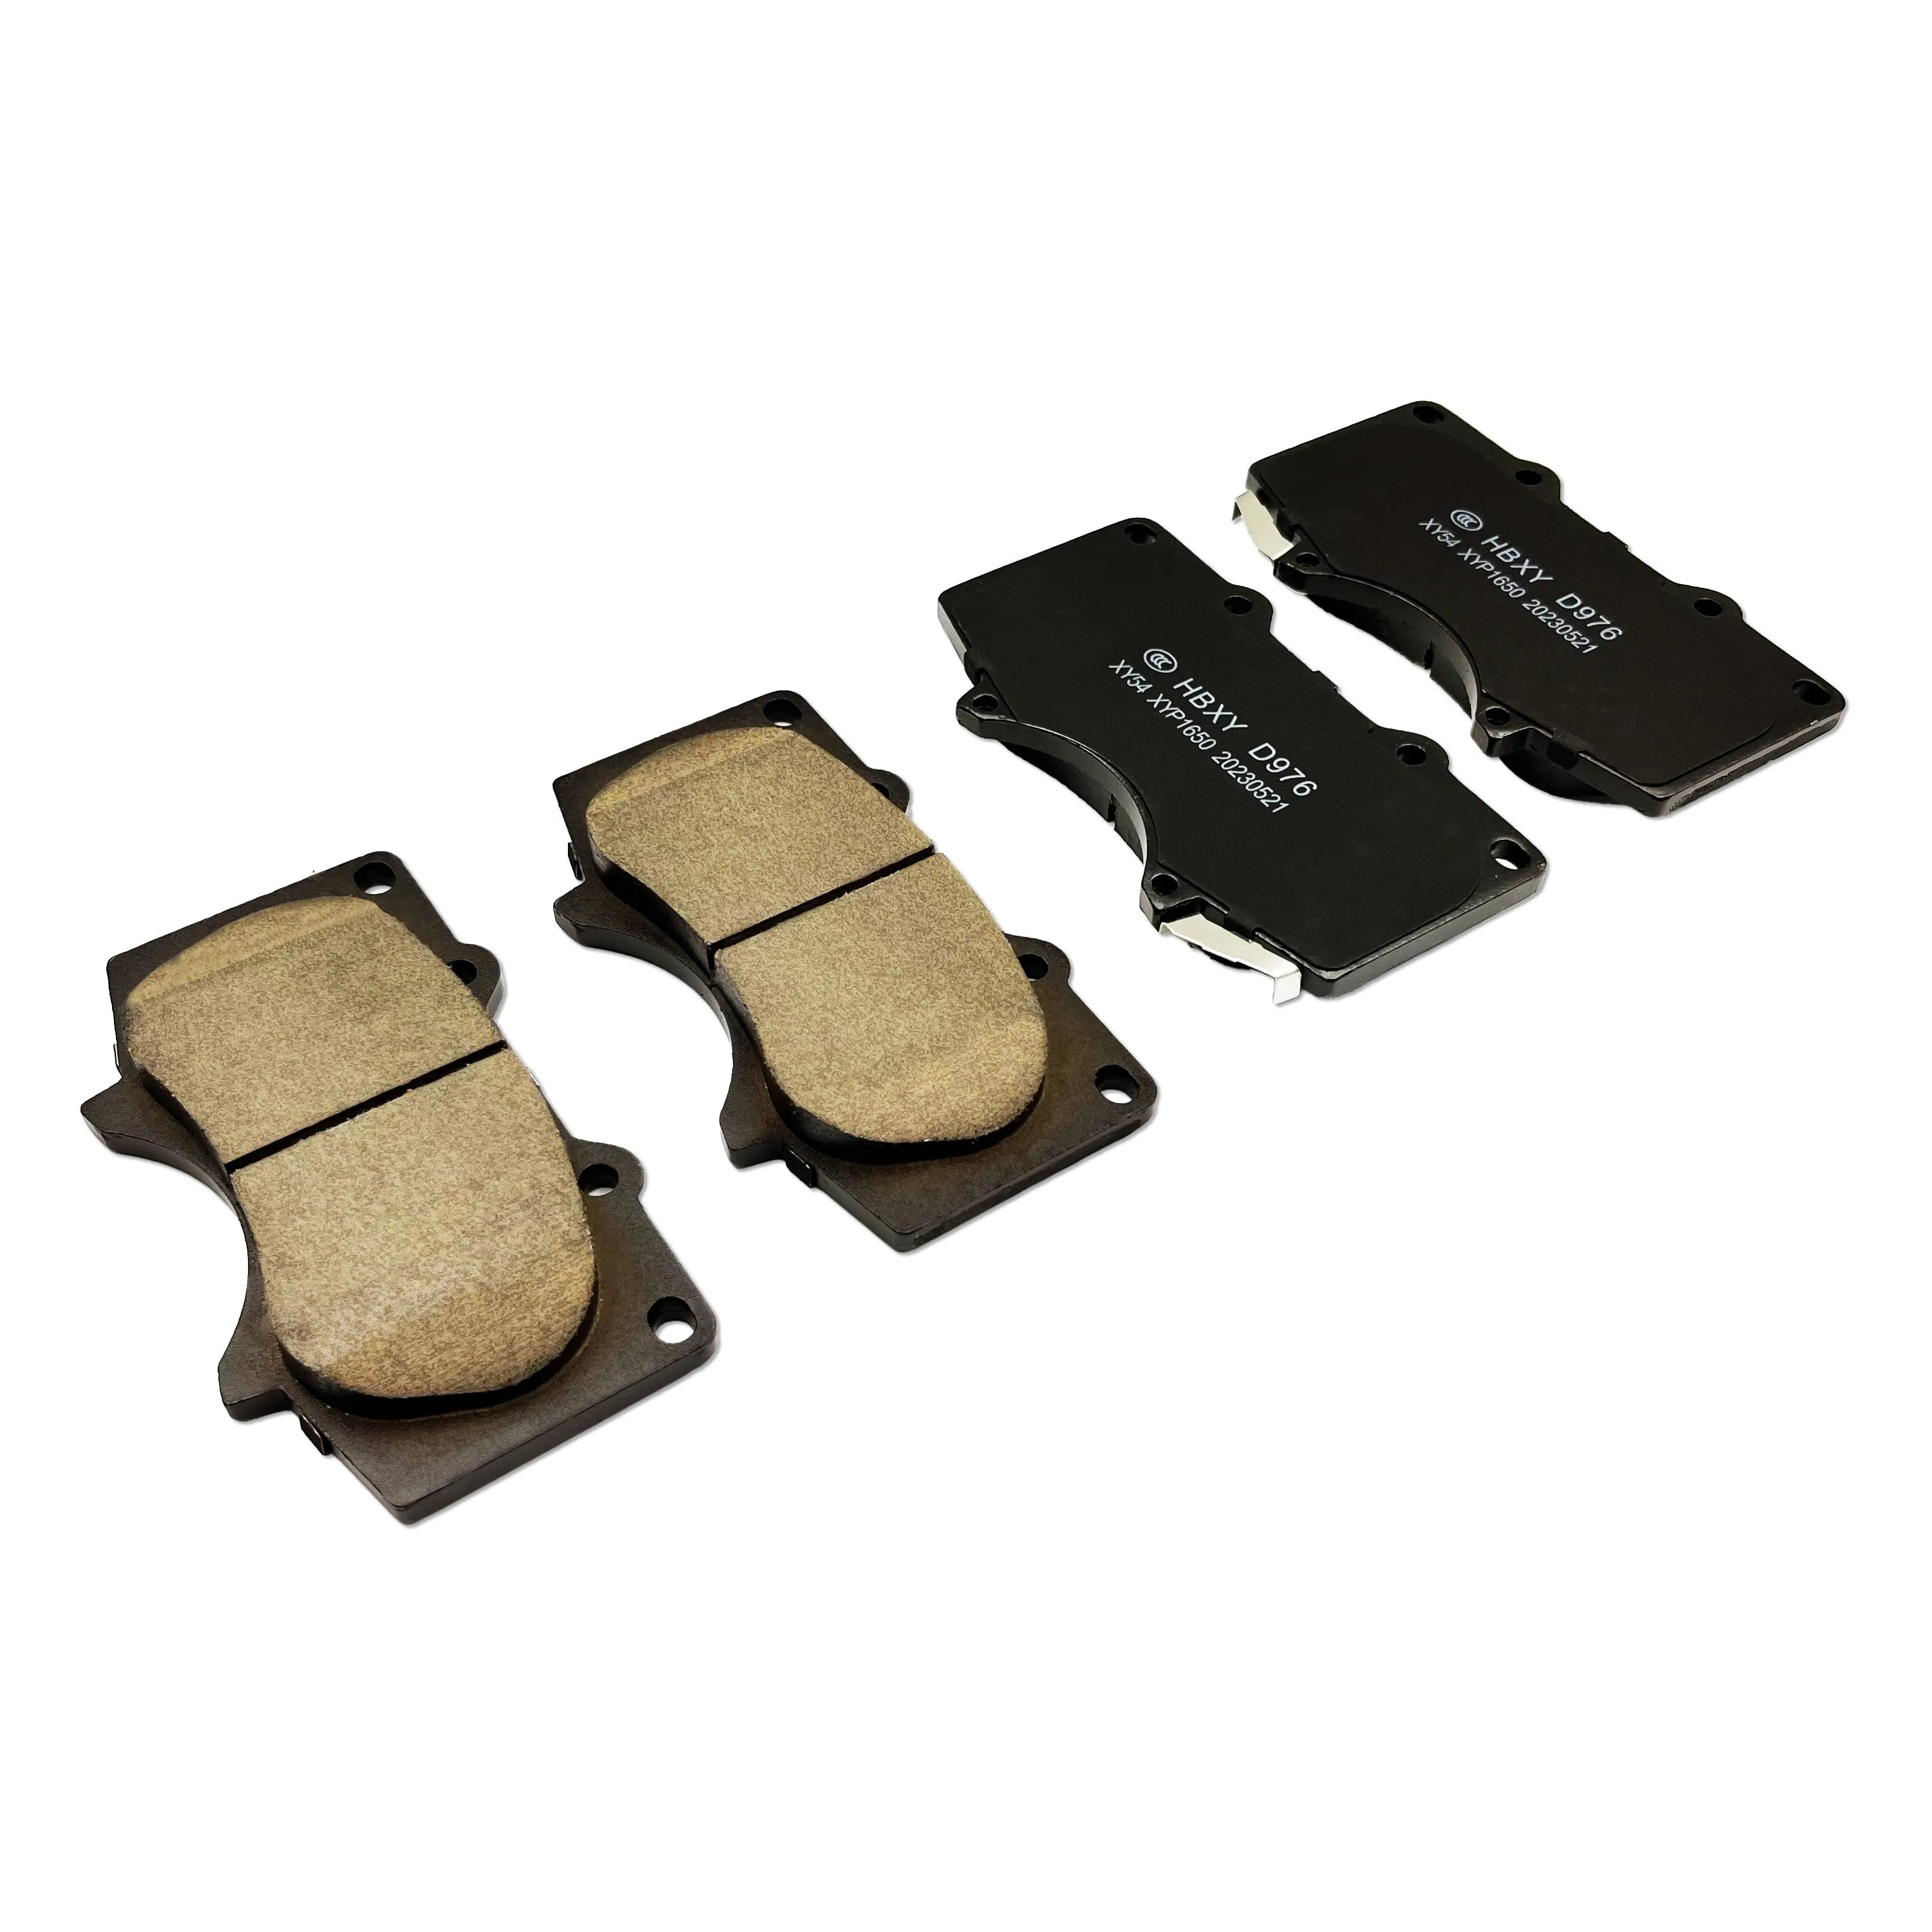 Wholesale Car Auto Parts Disk Rear Brake Pads for Lexus Mercedes Sprinter 45022-SDD-A00 Brake Pads